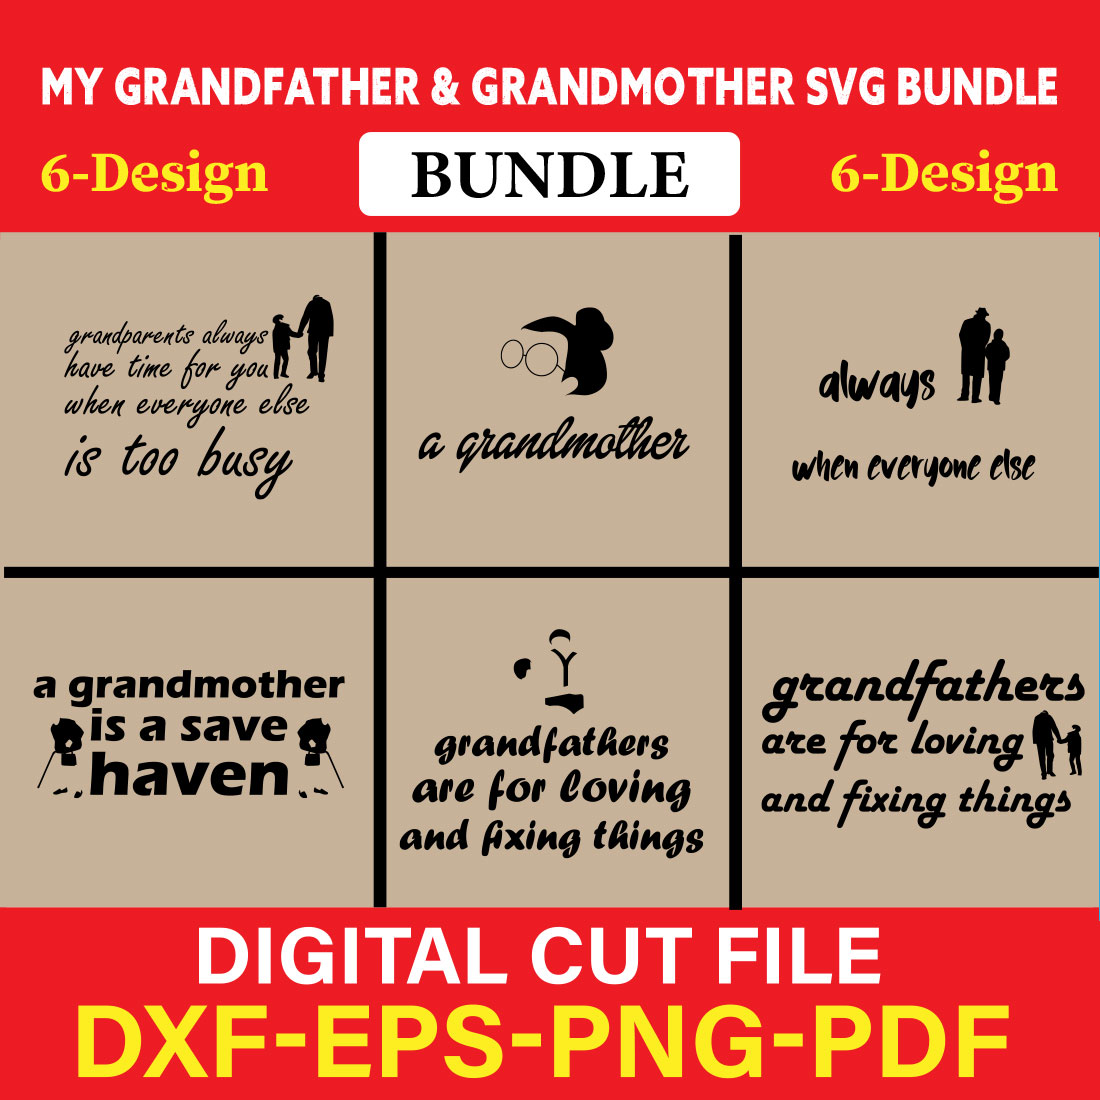 My Grandfather & Grandmother T-shirt Design Bundle Vol-5 cover image.